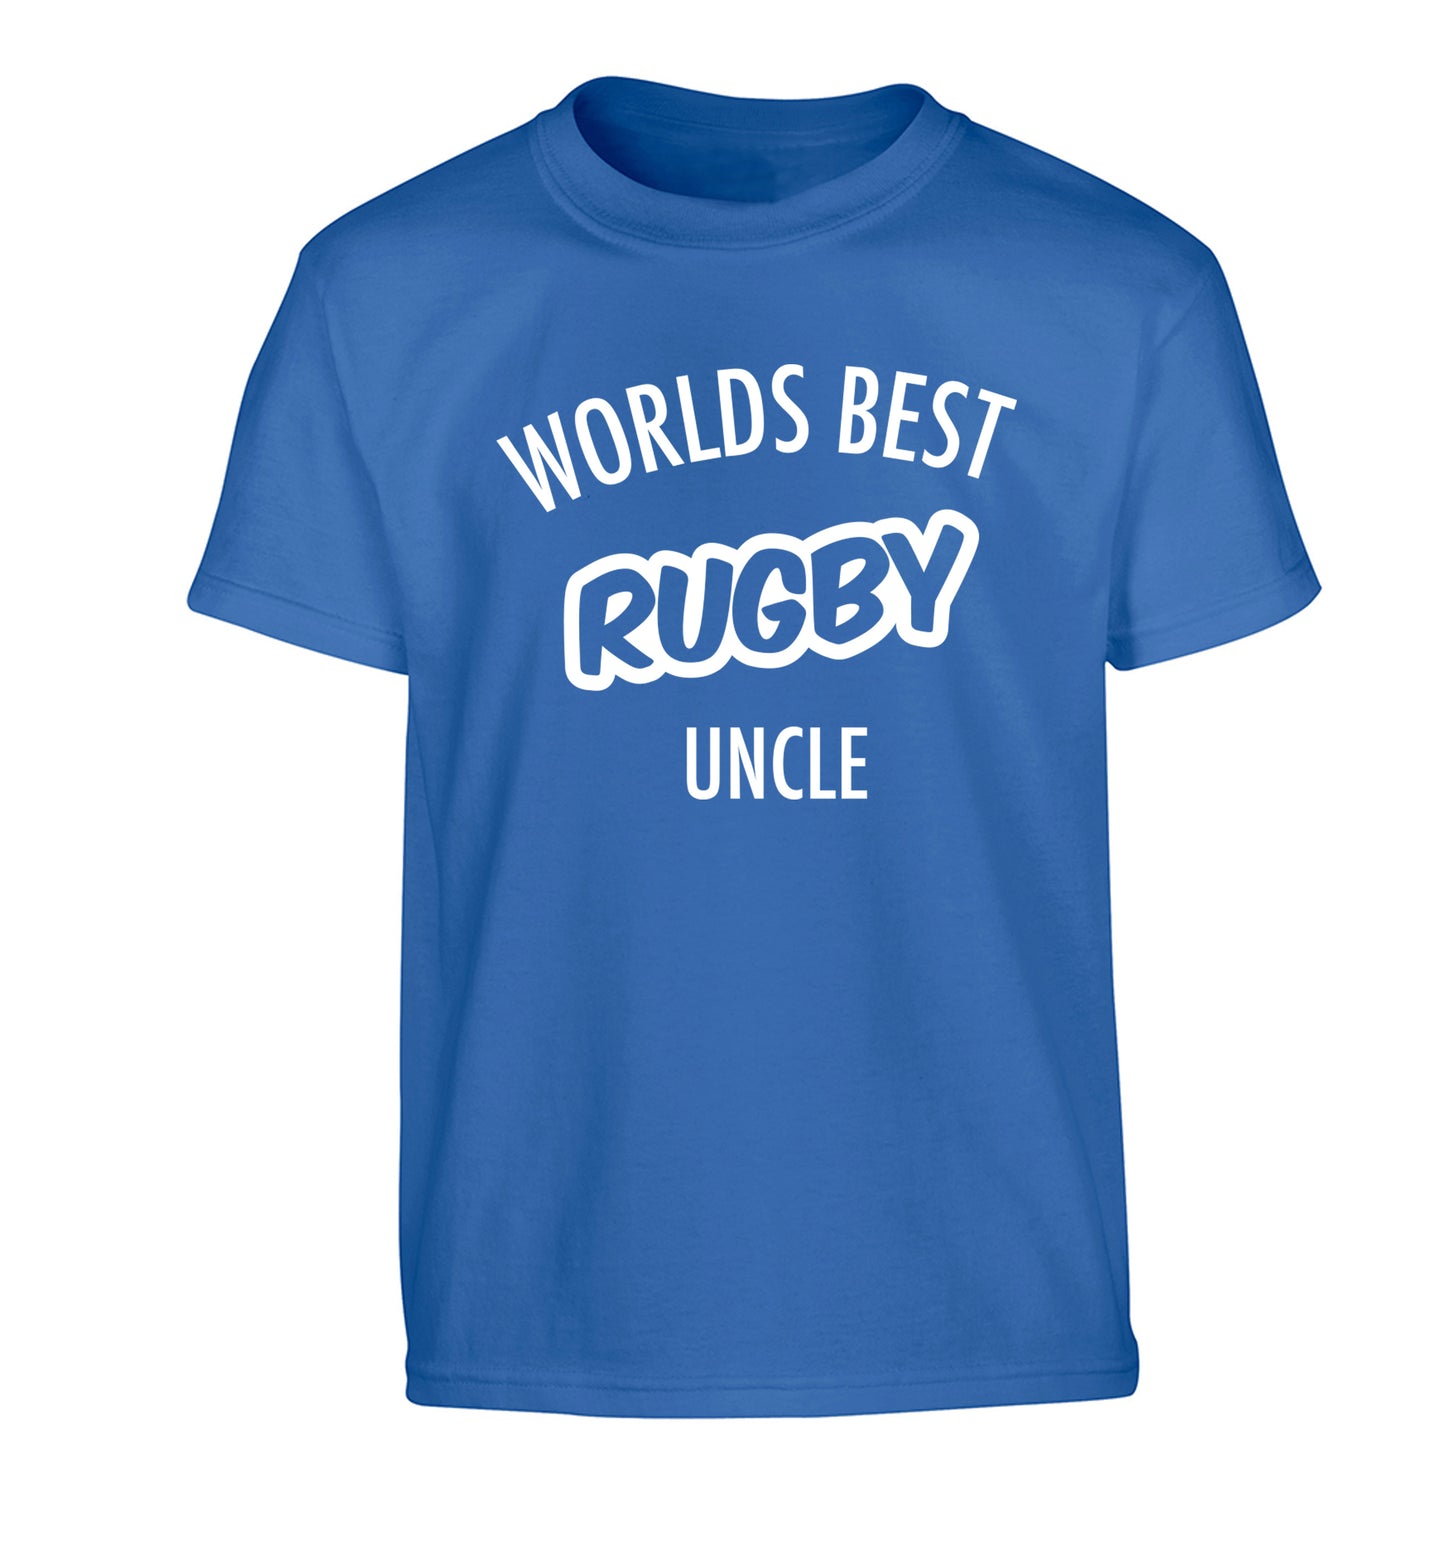 Worlds best rugby uncle Children's blue Tshirt 12-13 Years